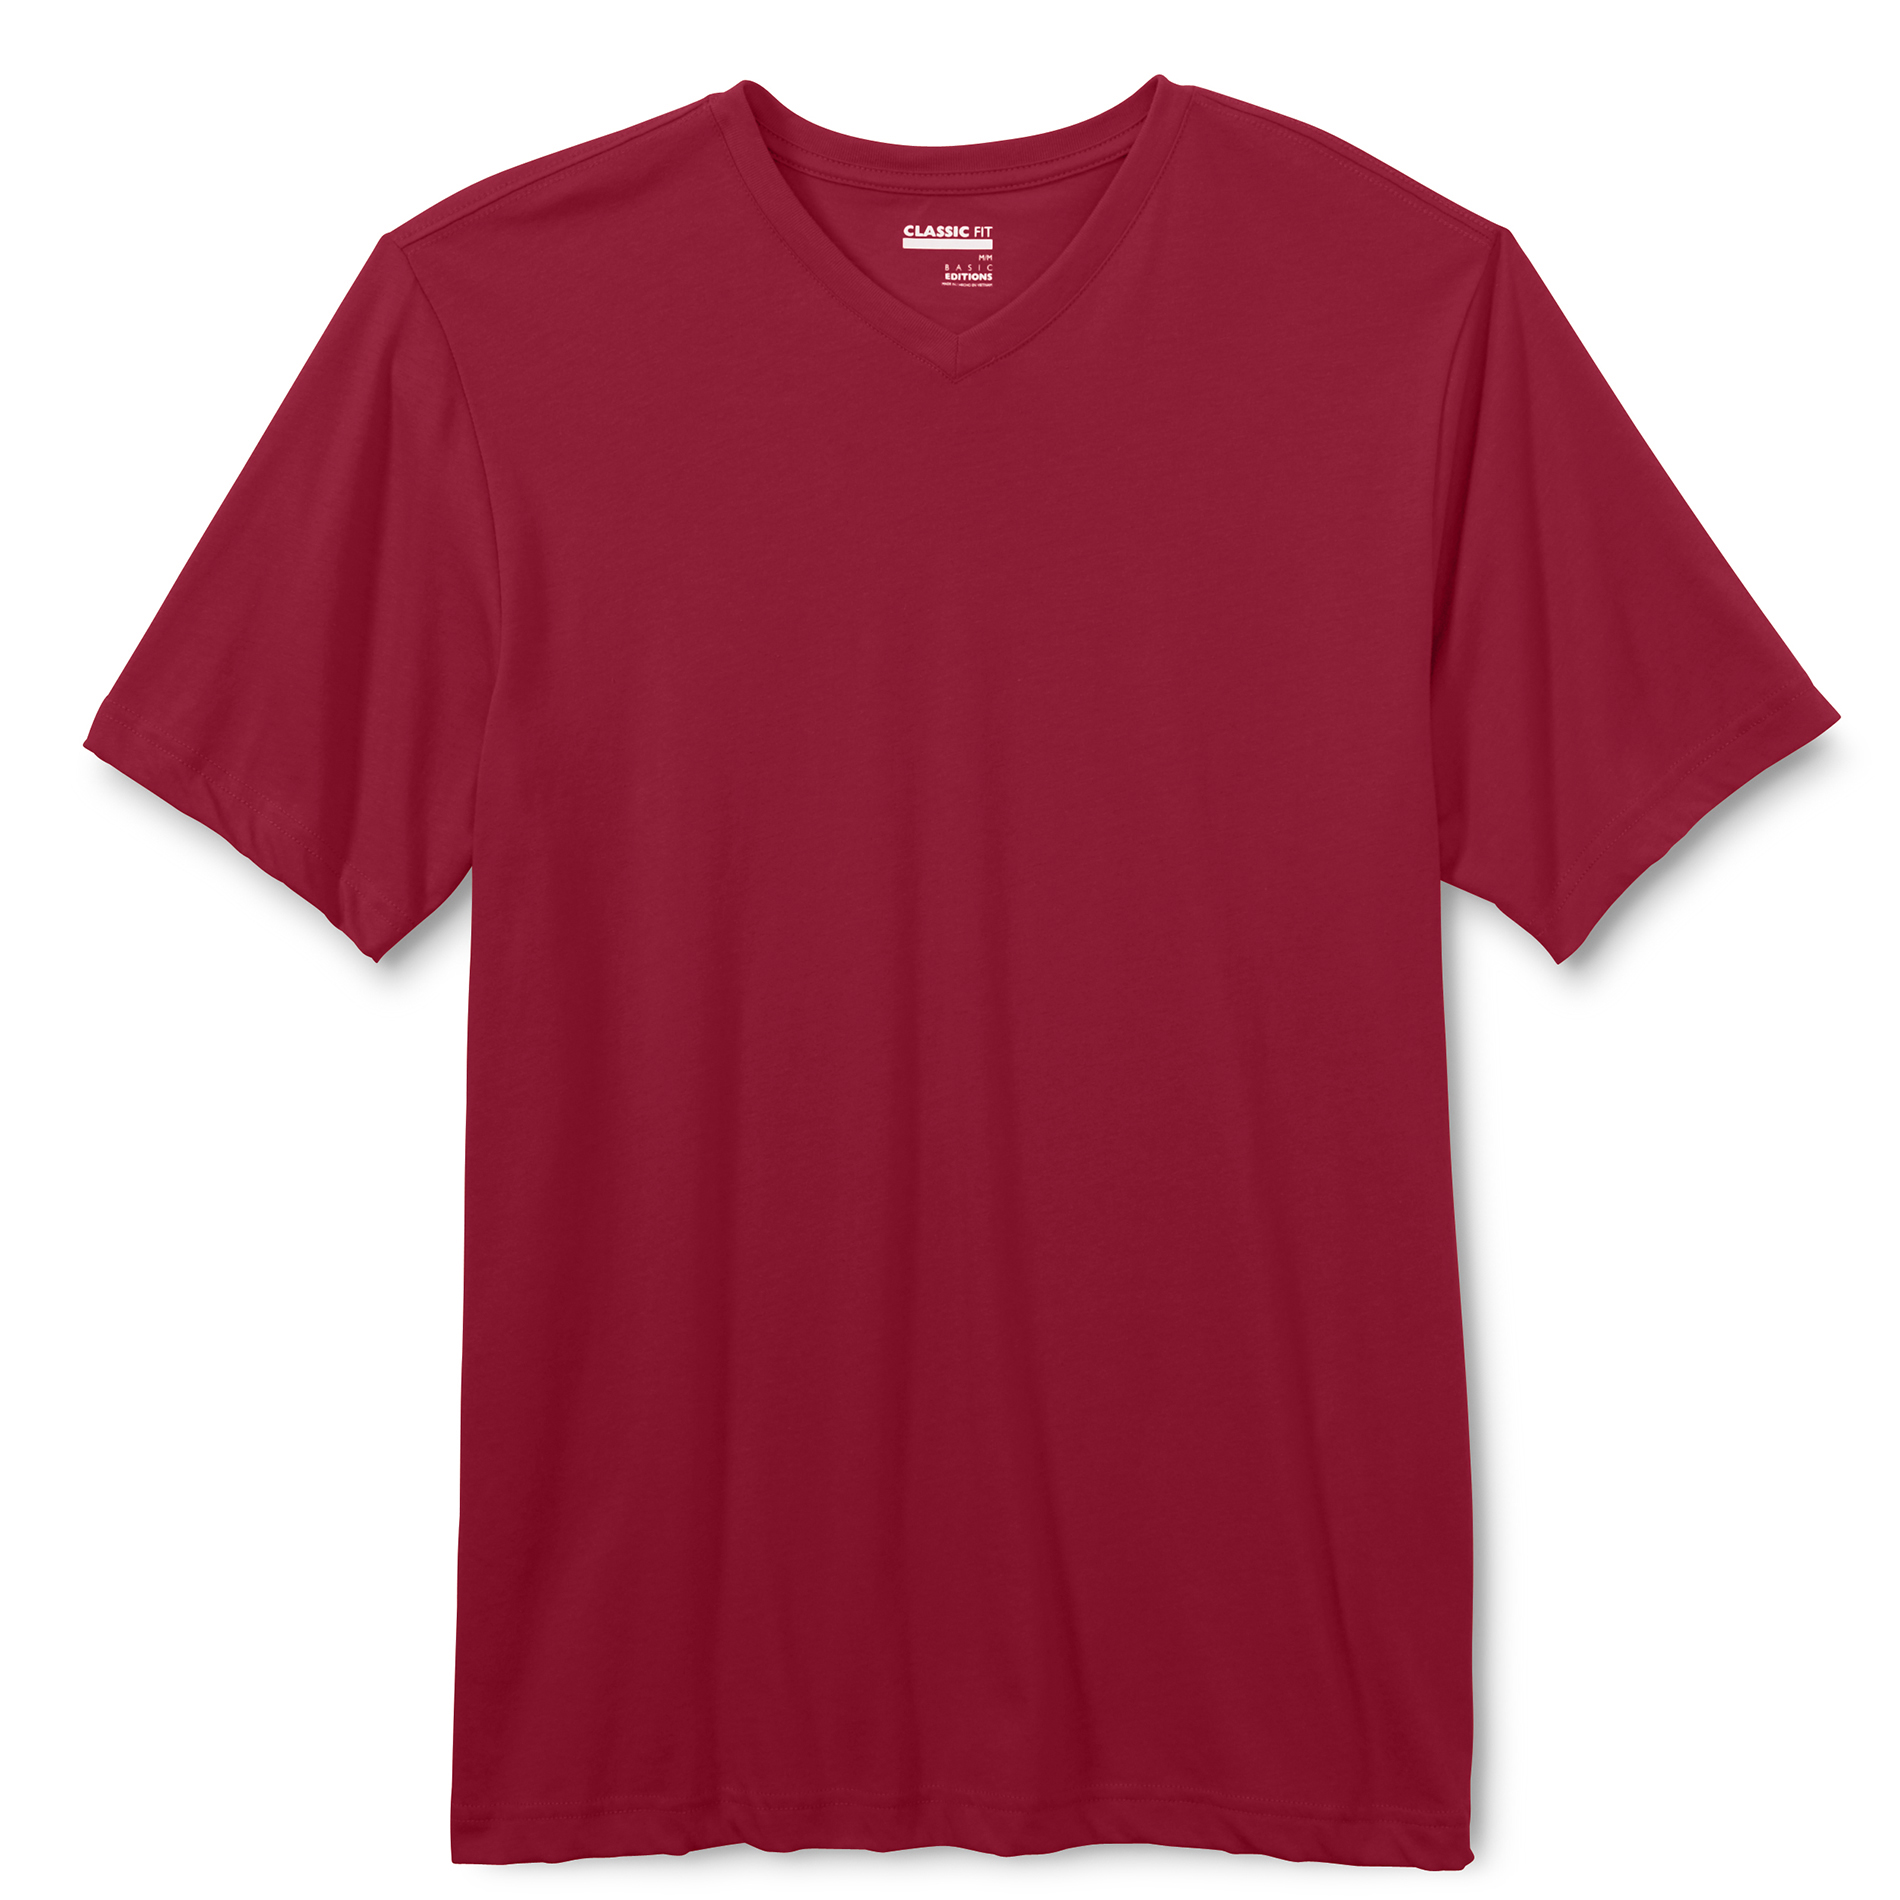 Basic Editions Men's Classic Fit V-Neck T-Shirt